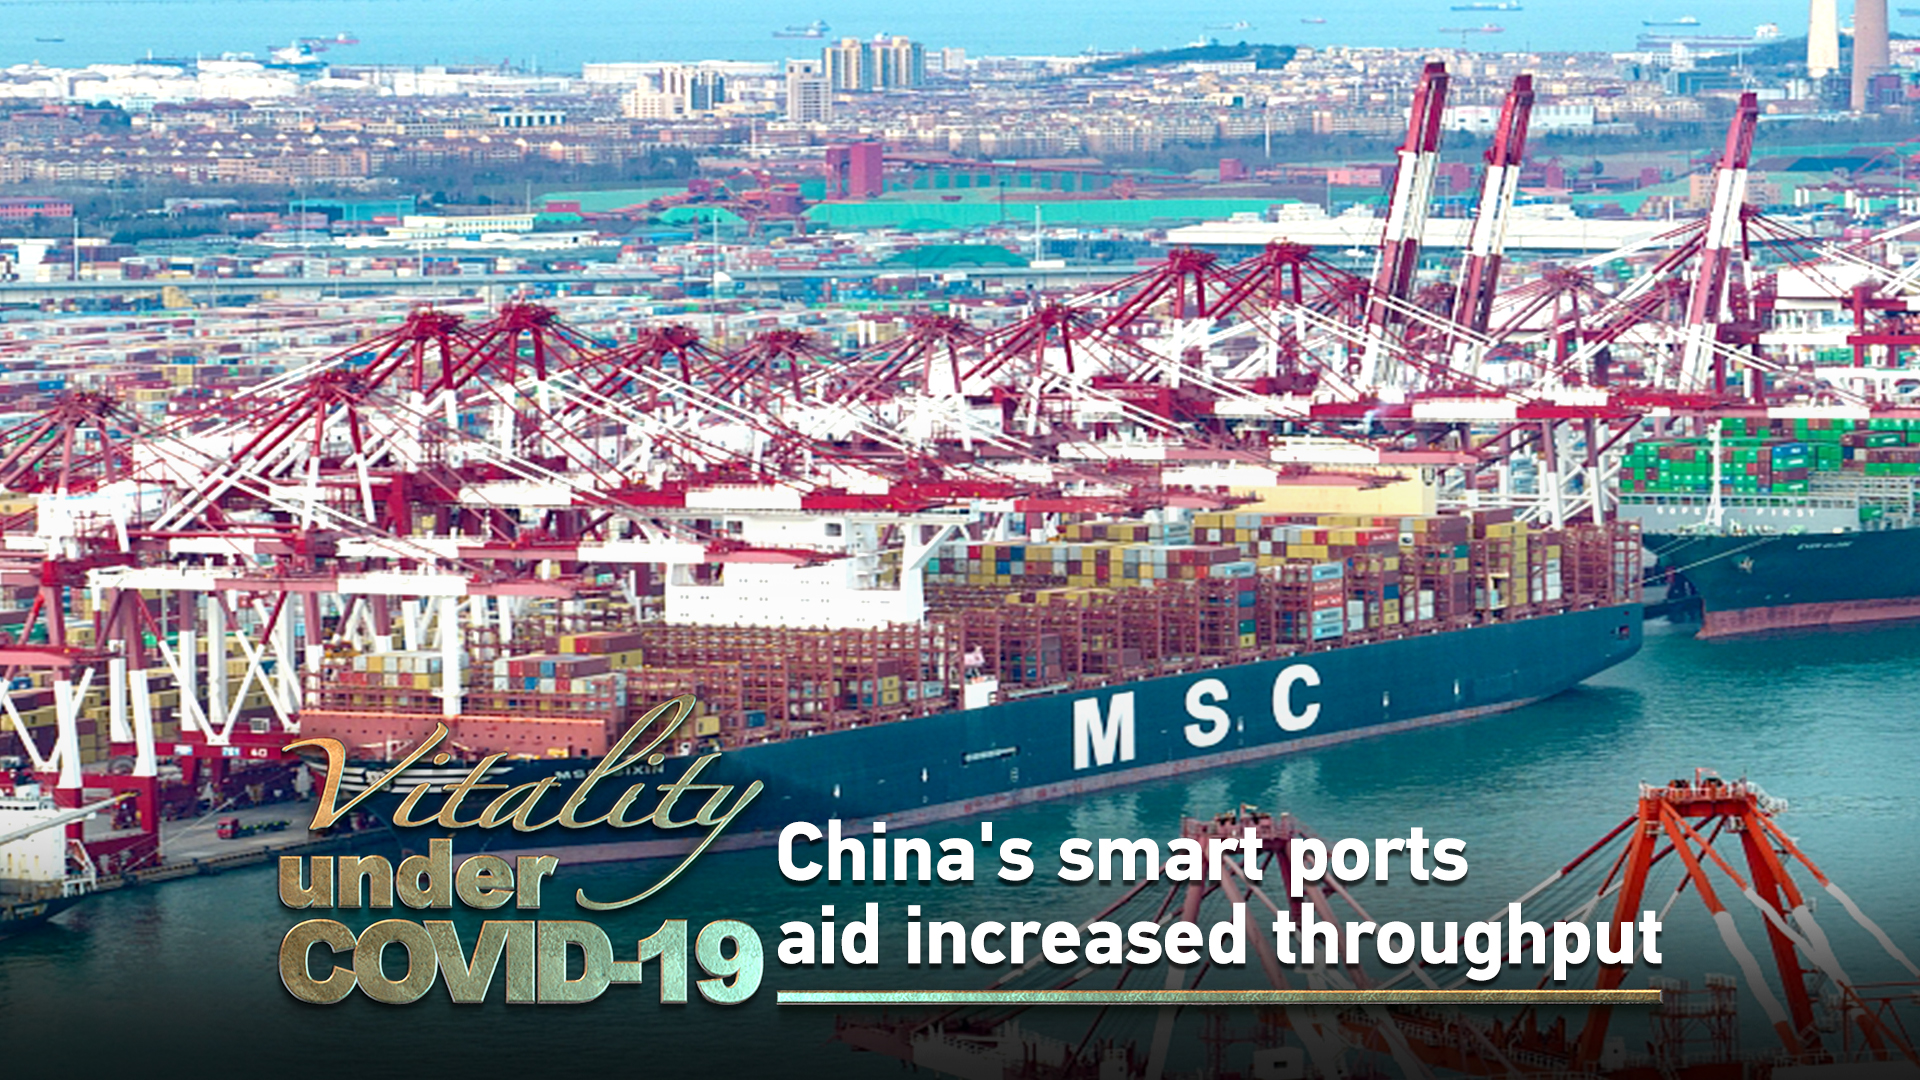 Vitality under COVID-19: China's smart ports aid increased throughput